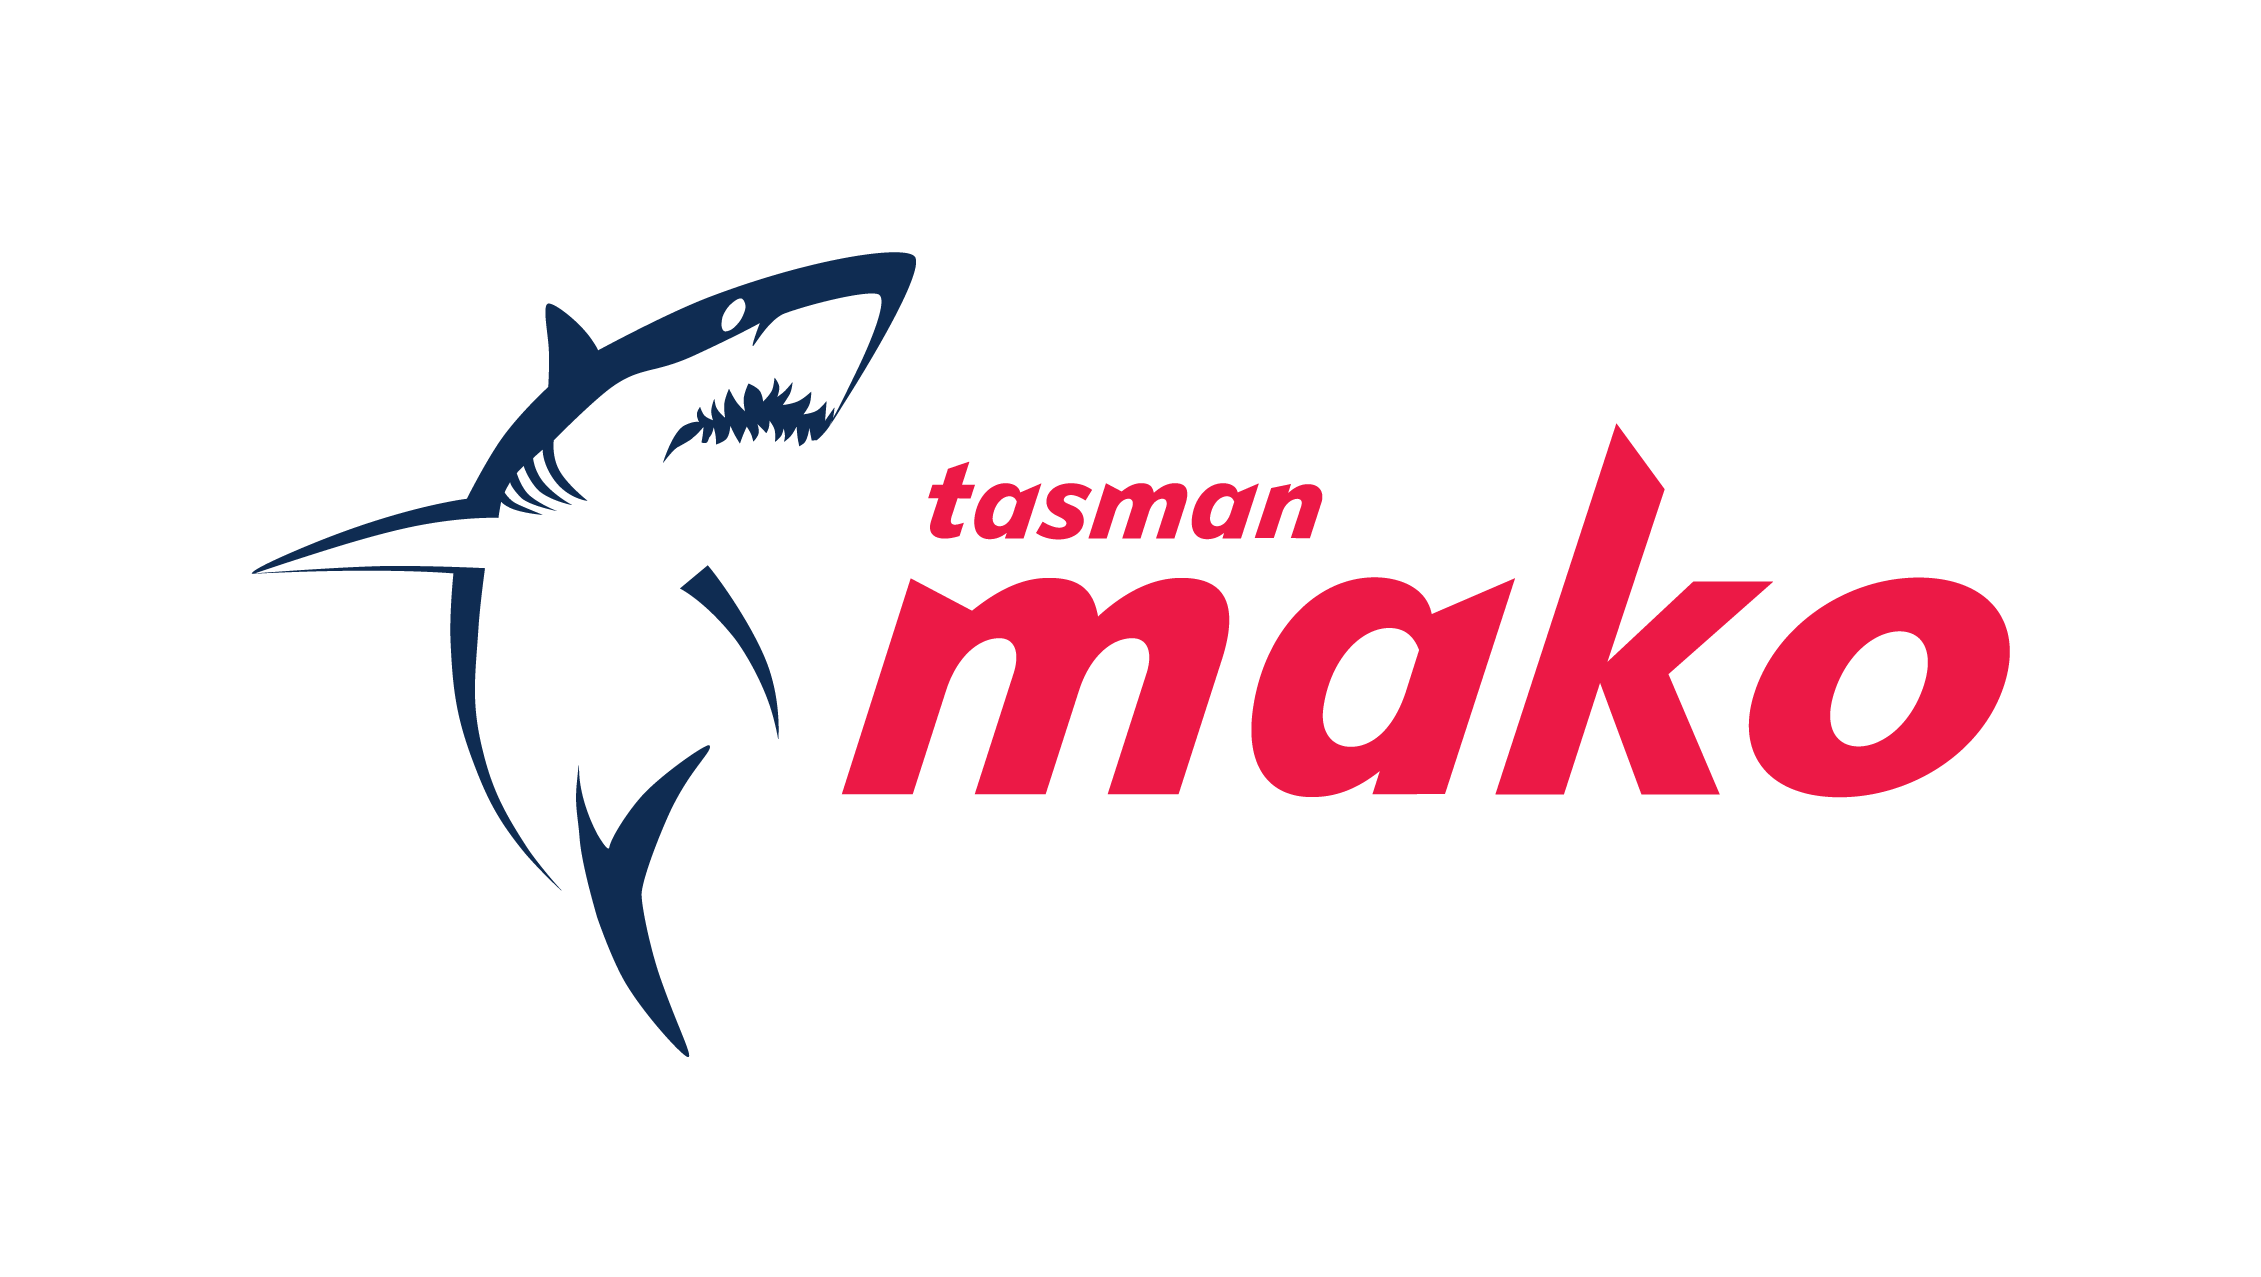 Tasman Mako Tickets logo